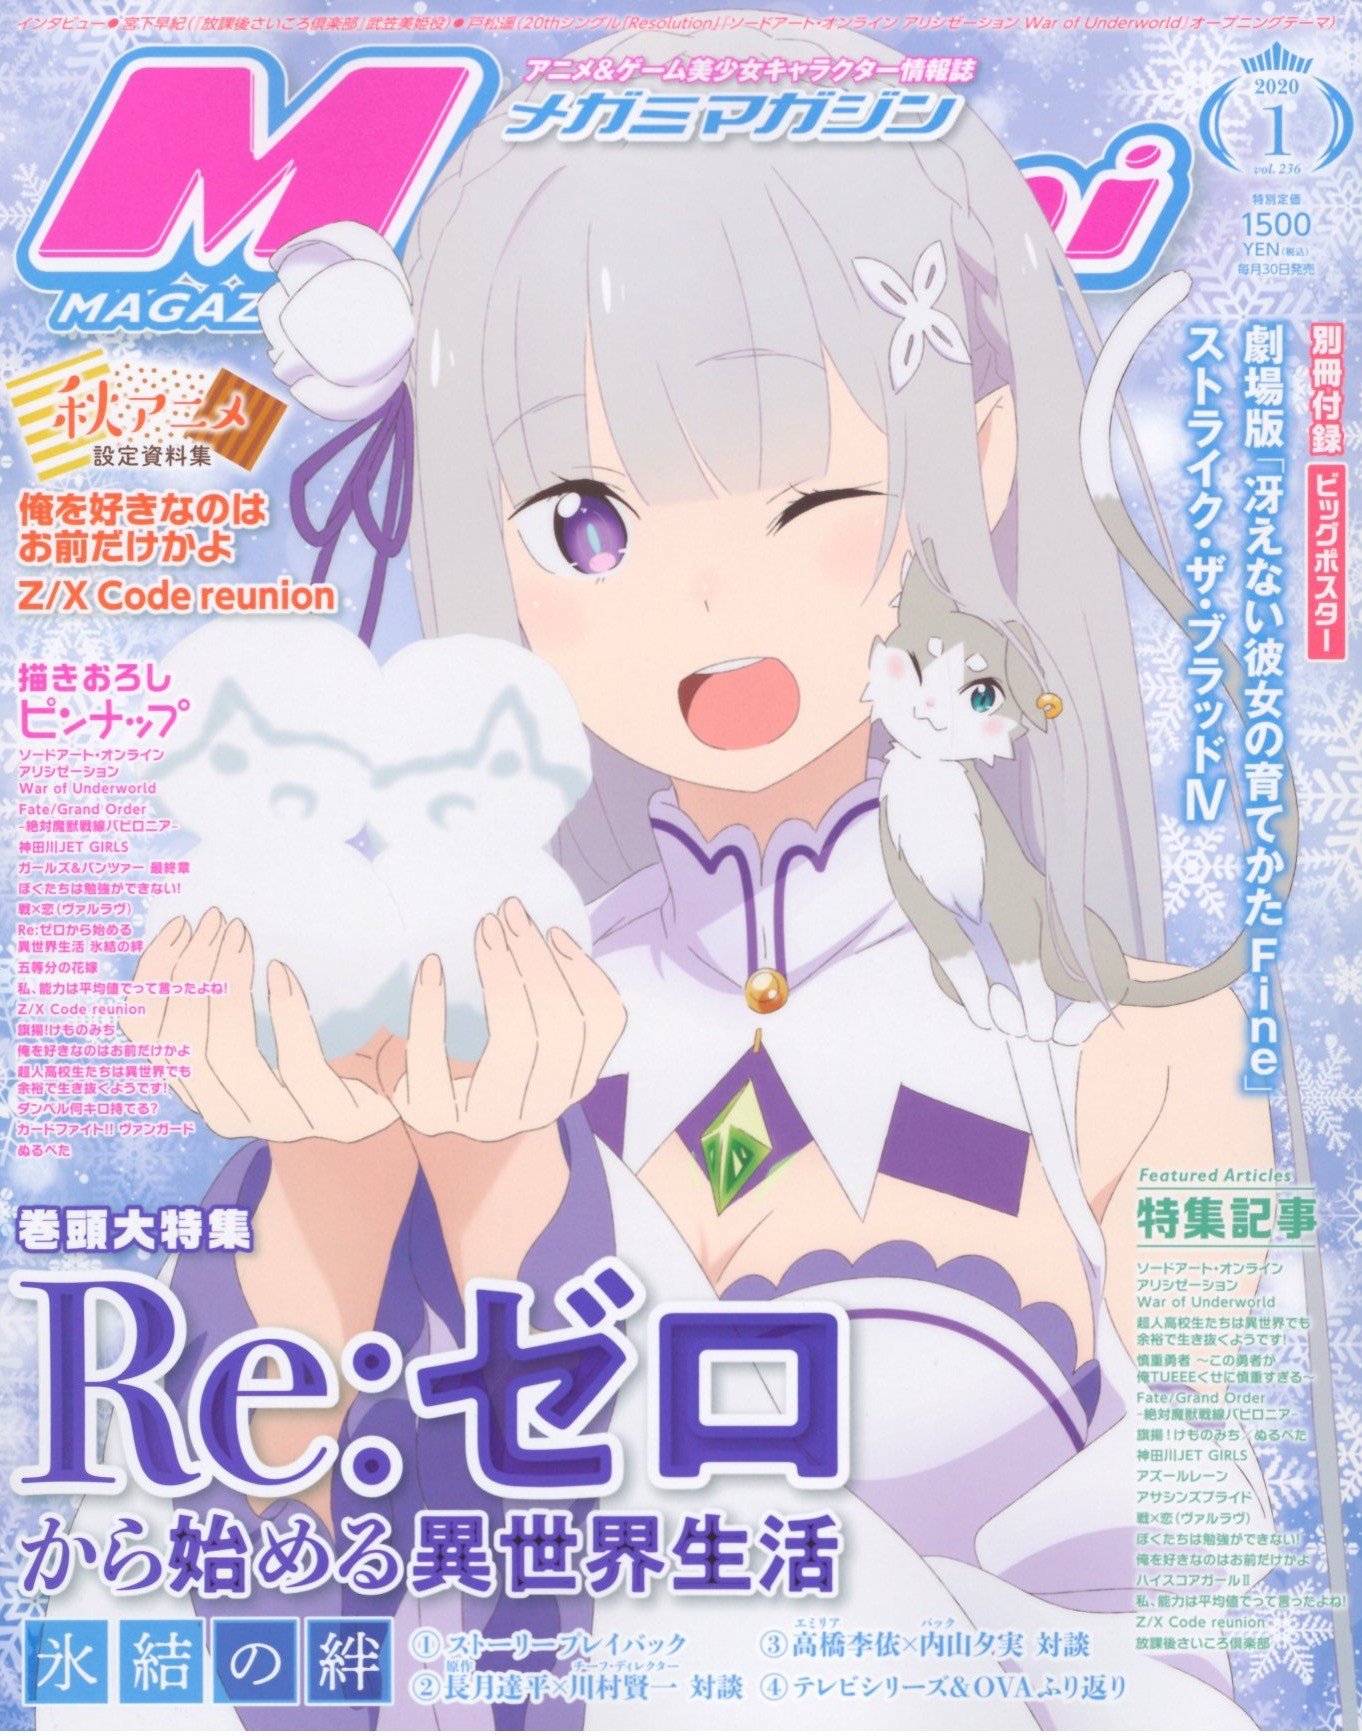 Megami Magazine Jan 2020 Cover